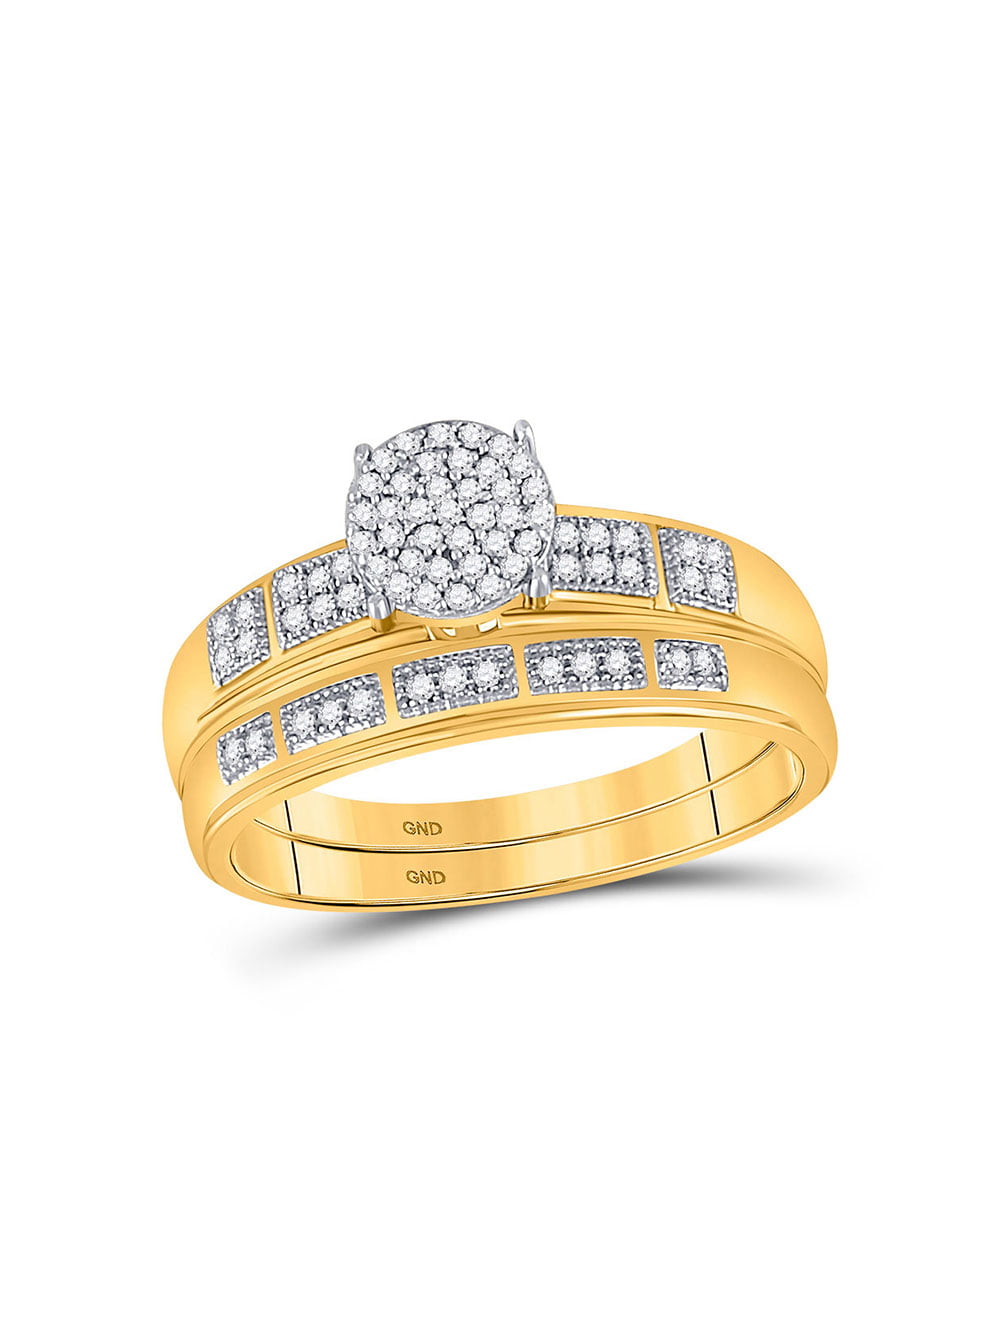 Diamond Engagement Ring Wedding Band Bridal Set 1/5ct 10k Yellow Gold 